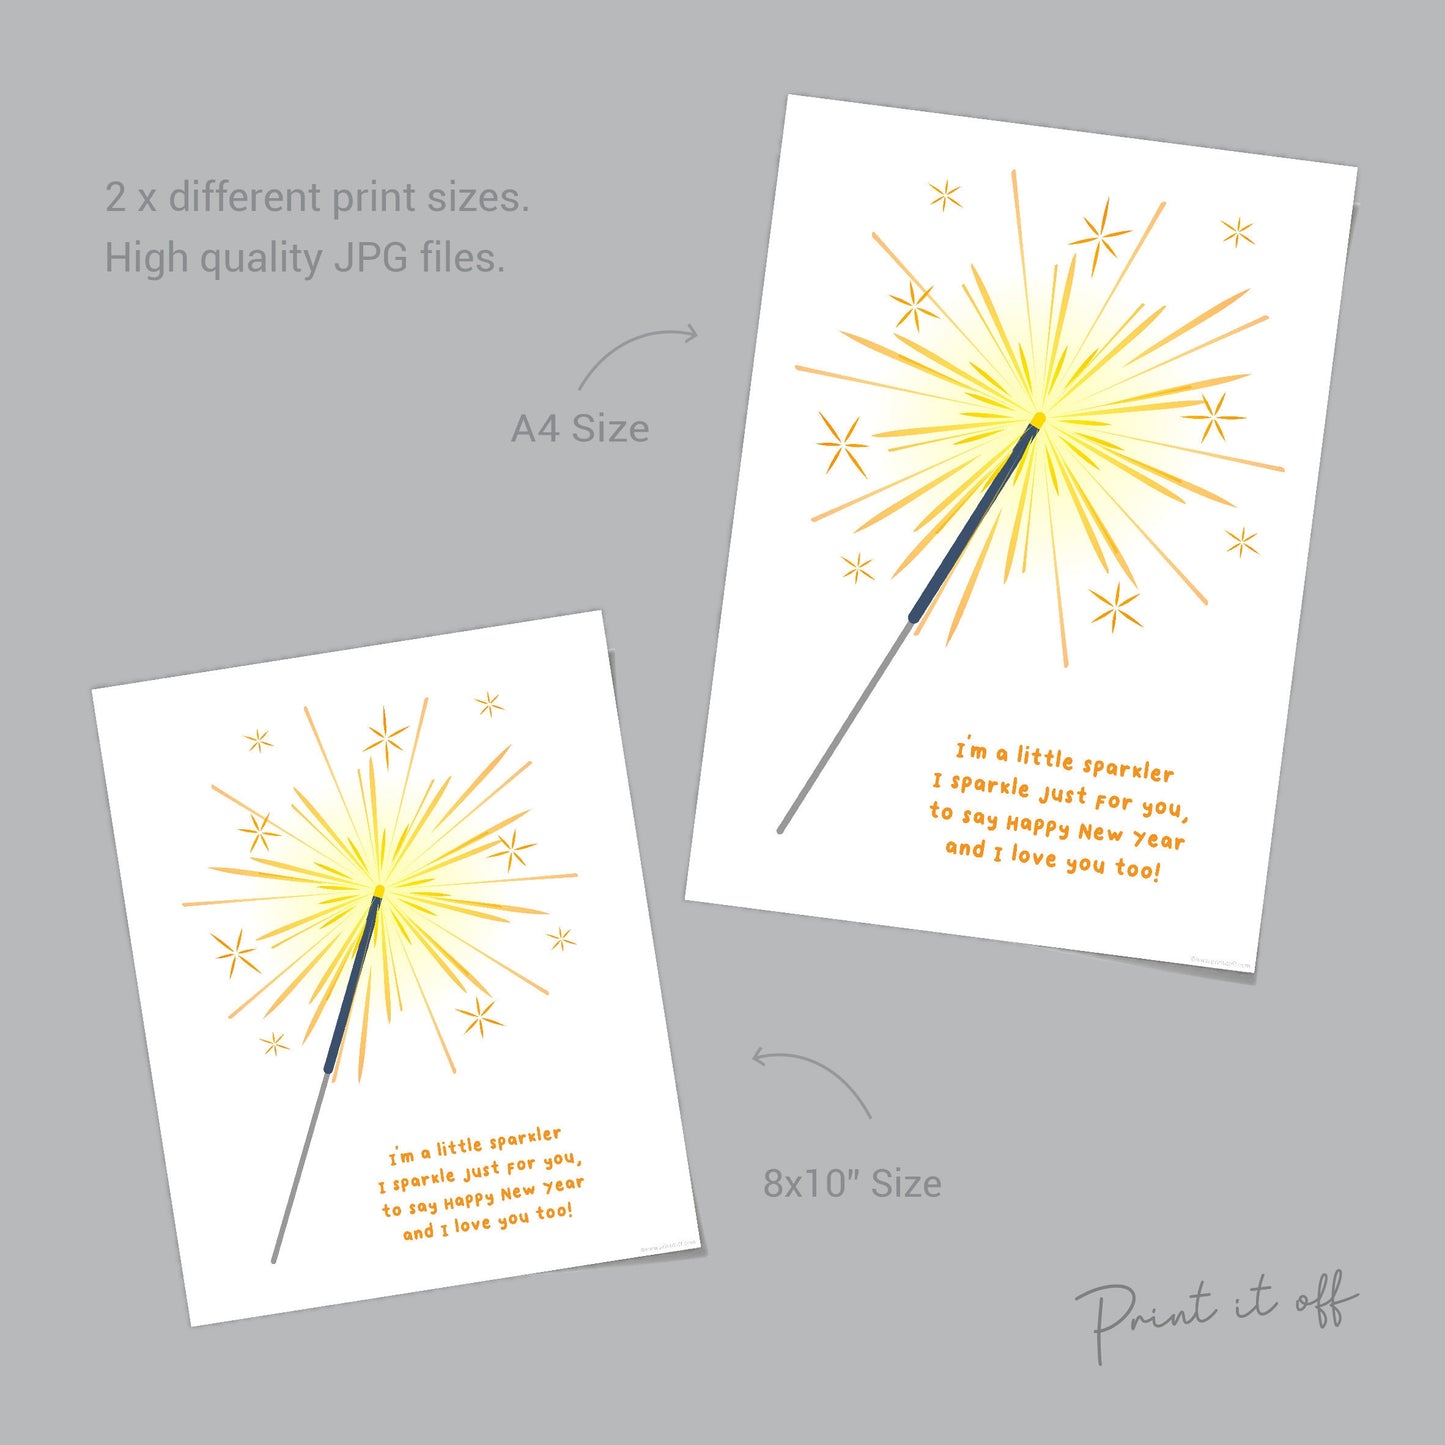 New Years Handprint Art Craft / Sparkler Fireworks / Baby Kids Toddler Hands / Keepsake Print Card Memory / PRINT IT OFF